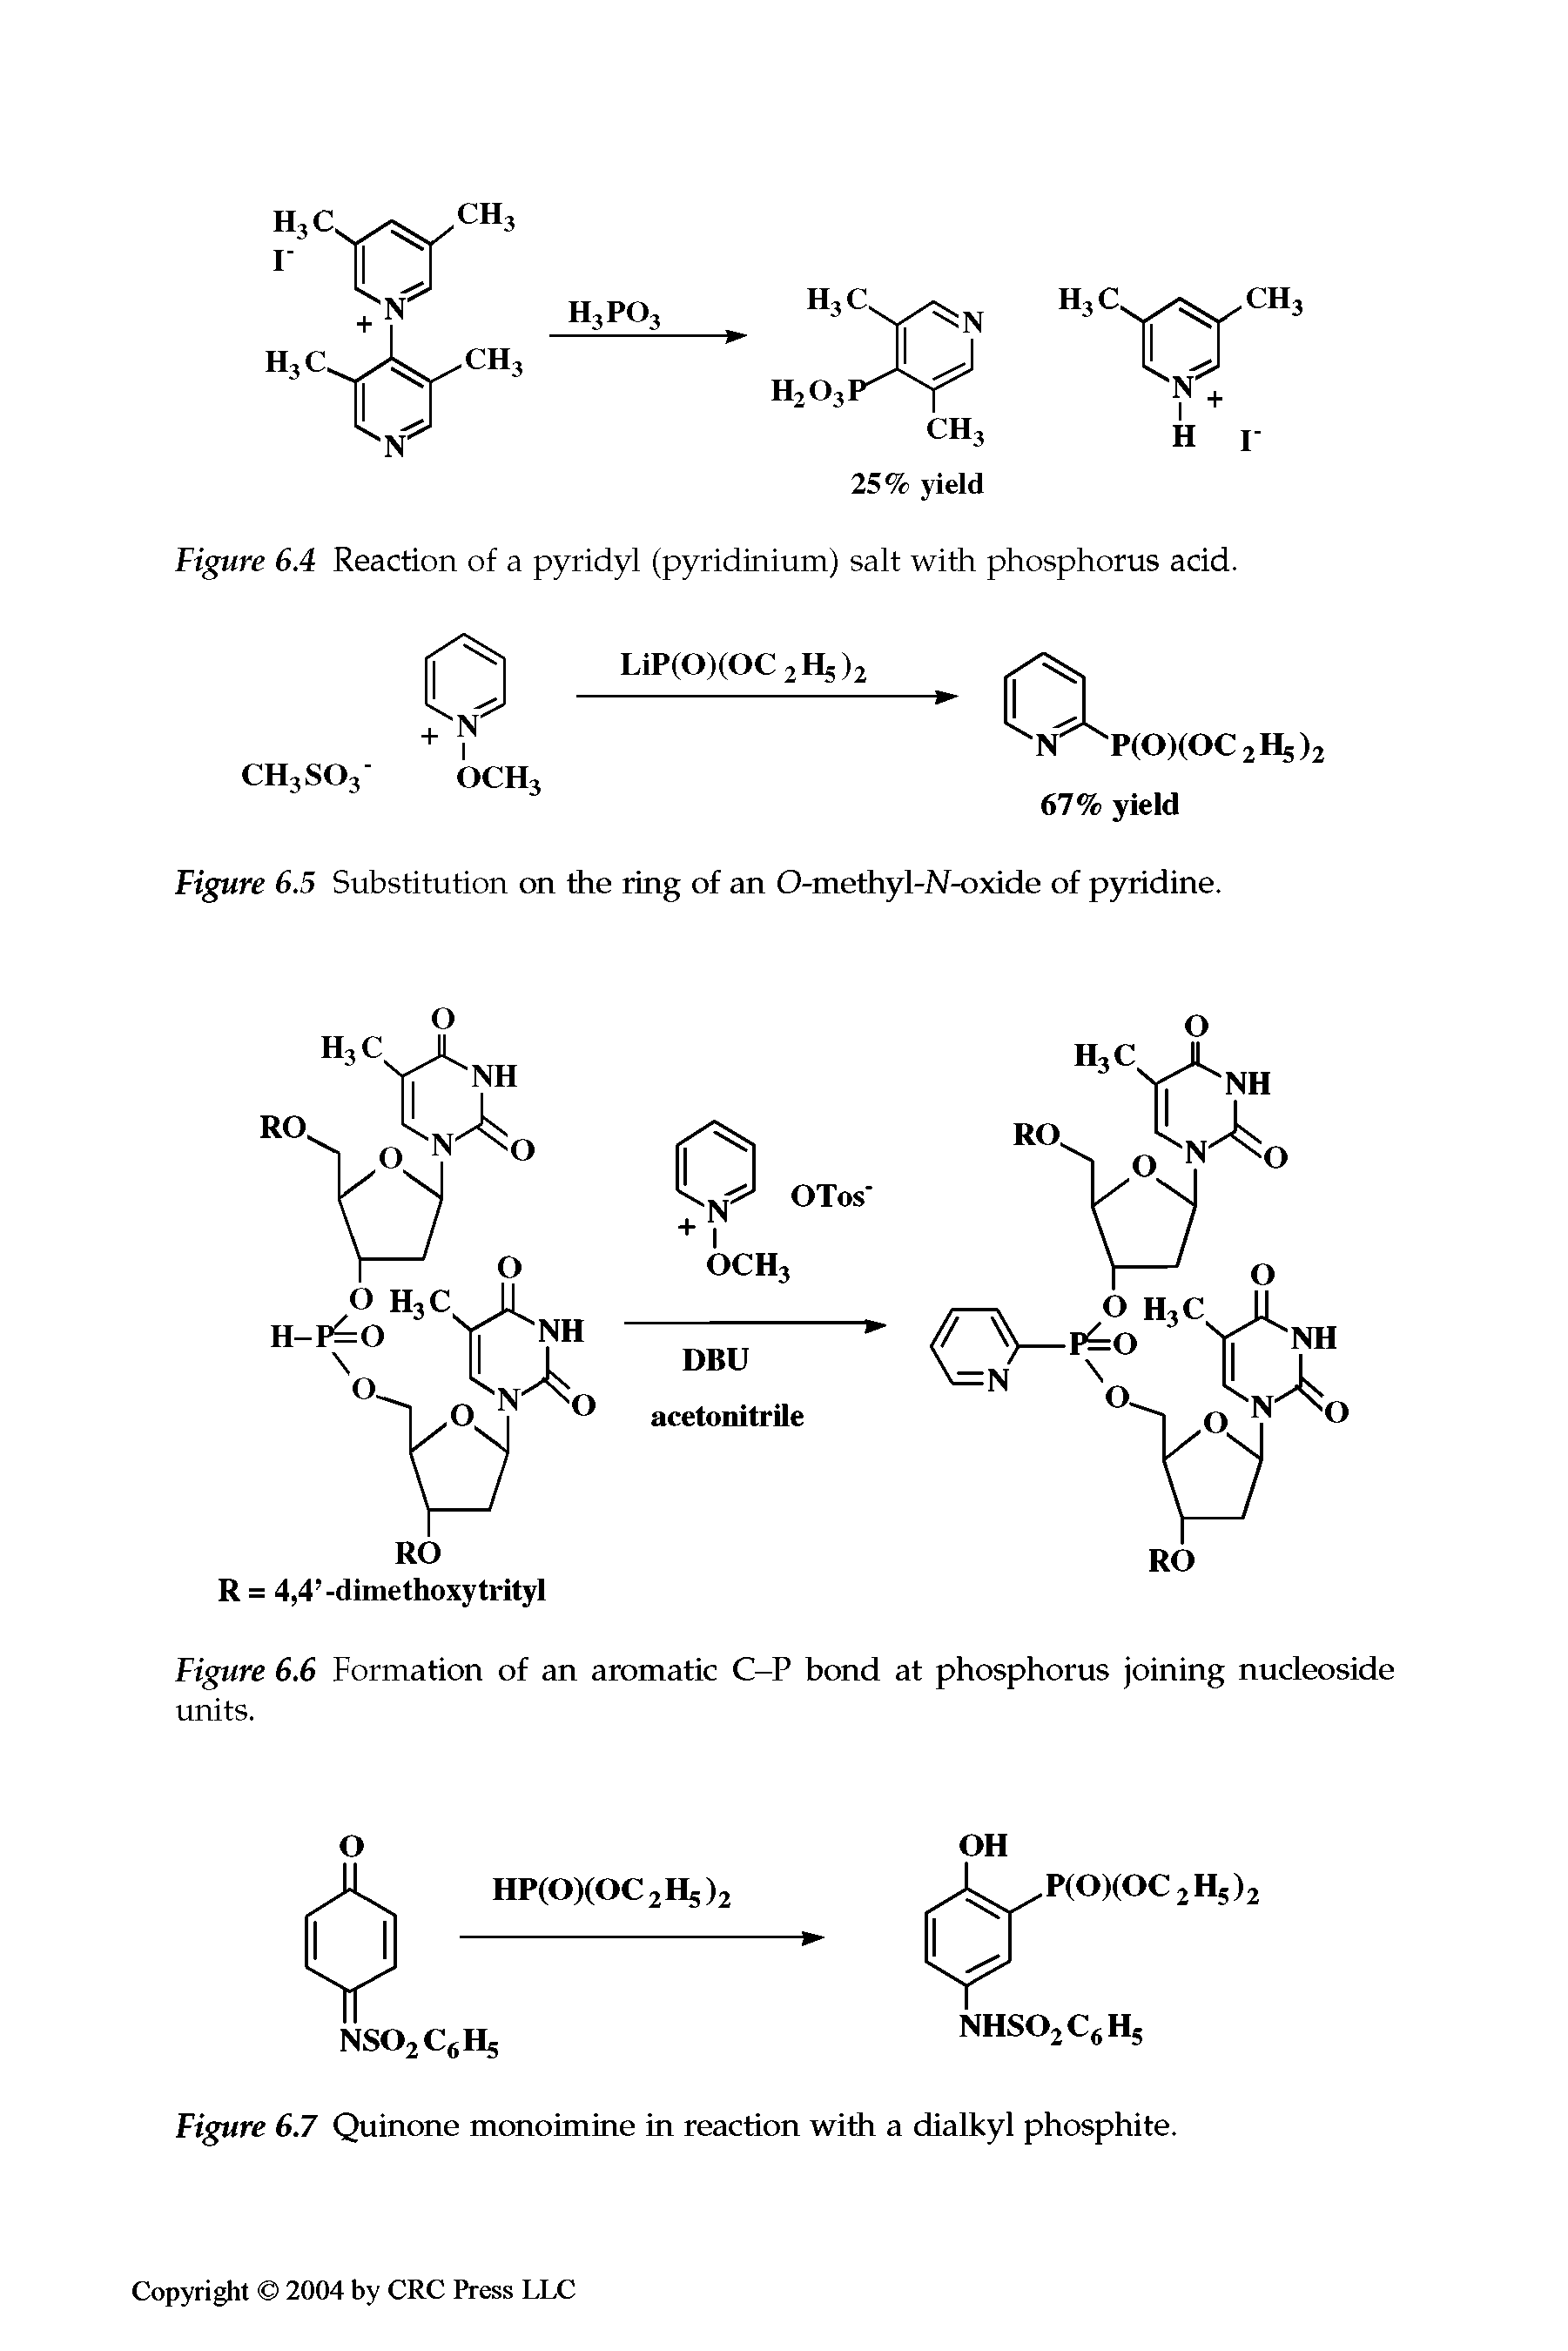 Figure 6.4 Reaction of a pyridyl (pyridinium) salt with phosphorus acid.